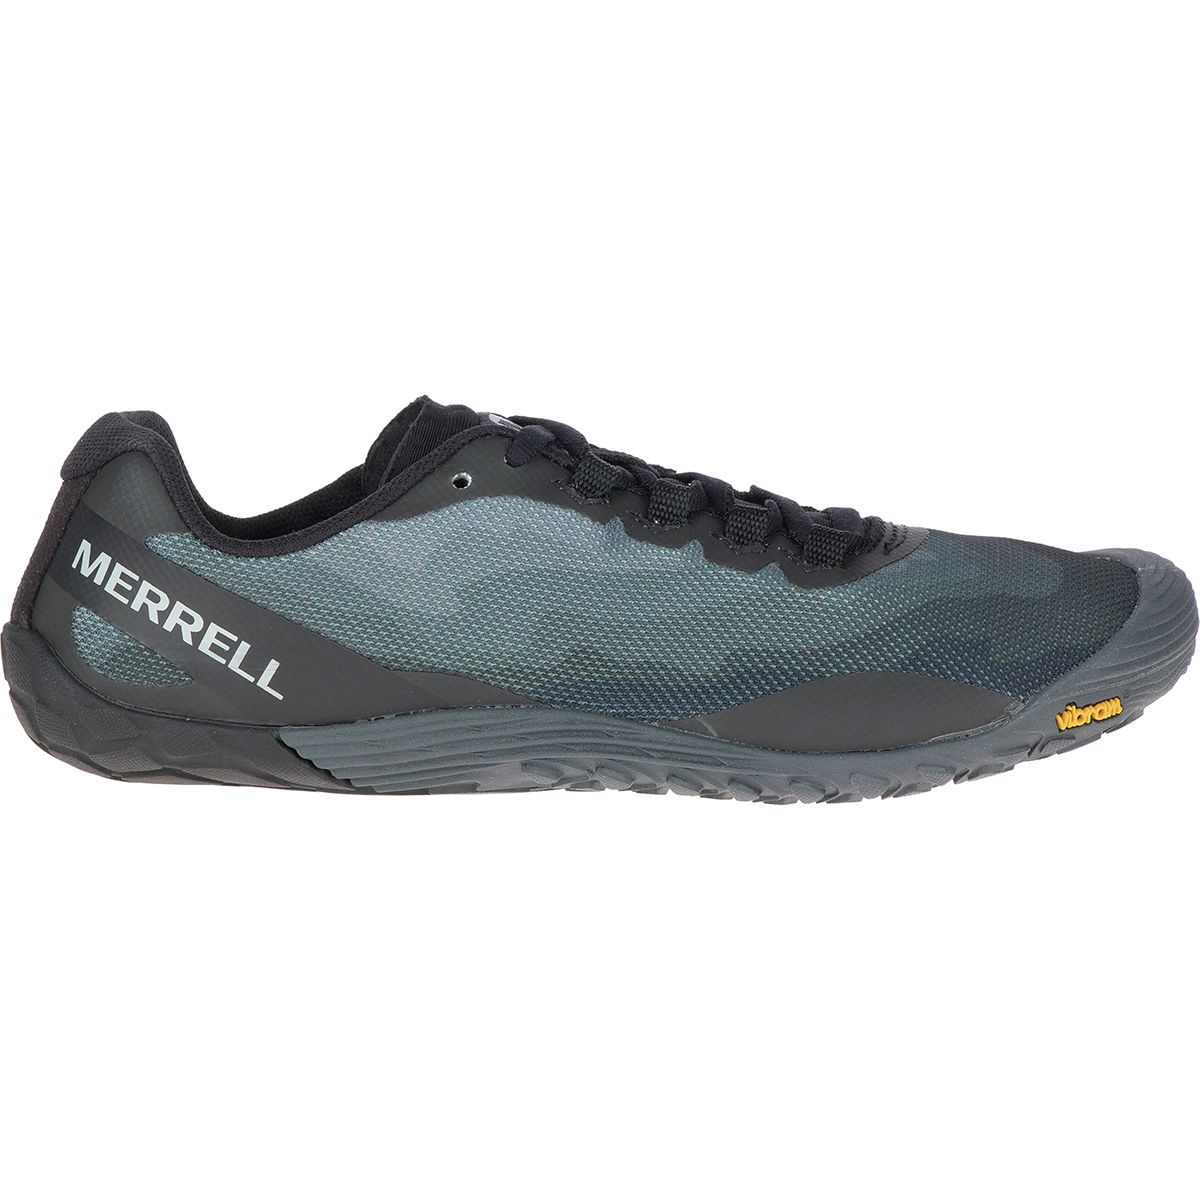 Merrell Vapor Glove 4 Shoe - Women's 